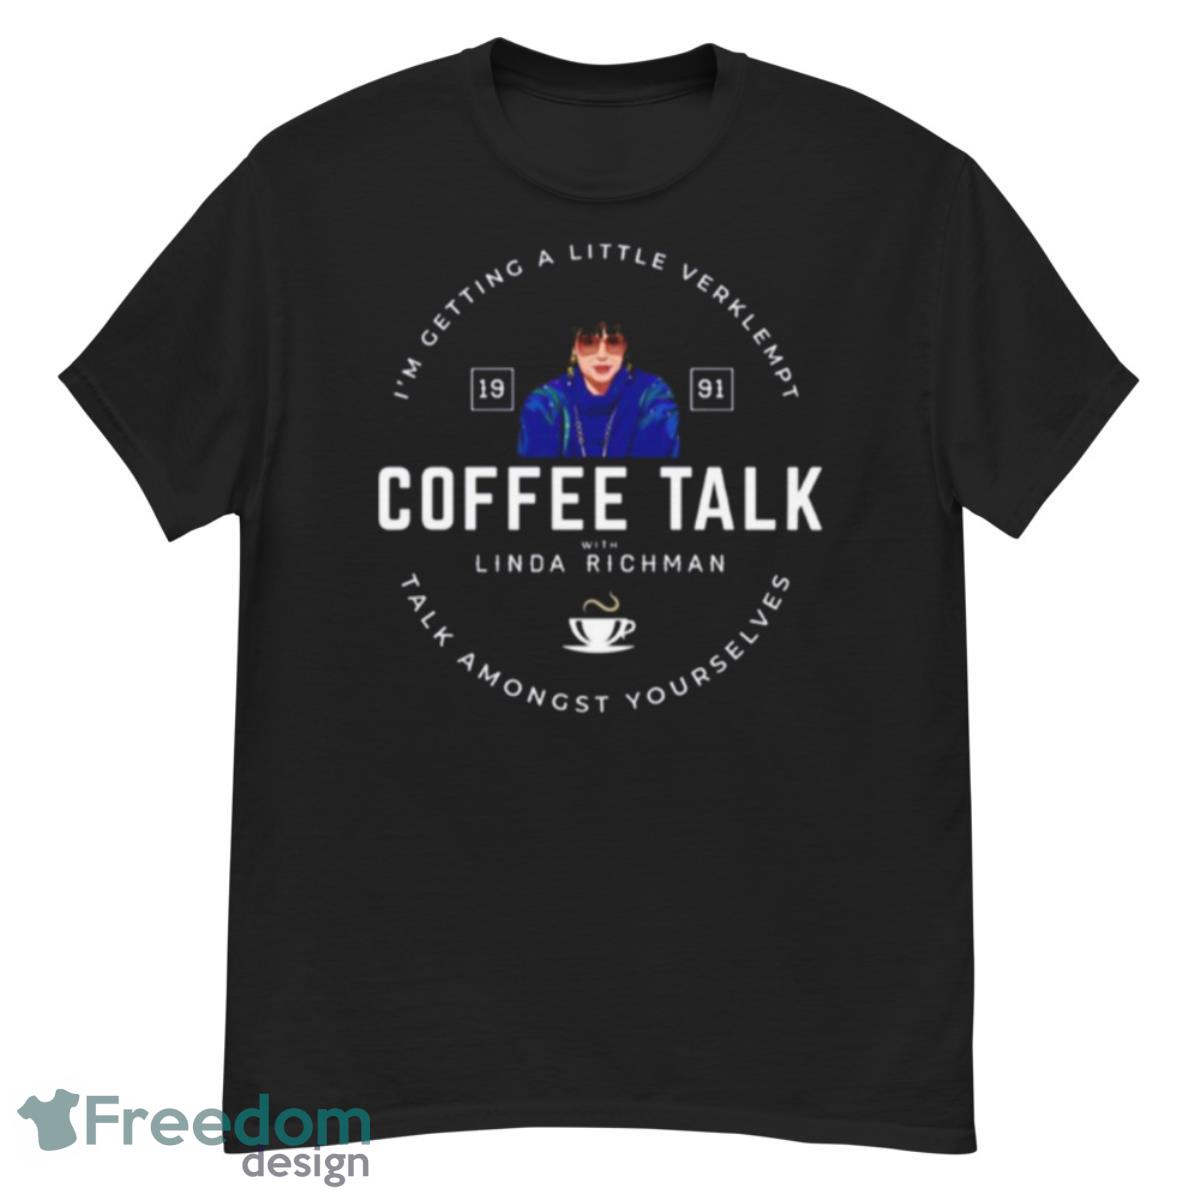 Coffee Talk With Linda Richman Est 1991 shirt - G500 Men’s Classic T-Shirt